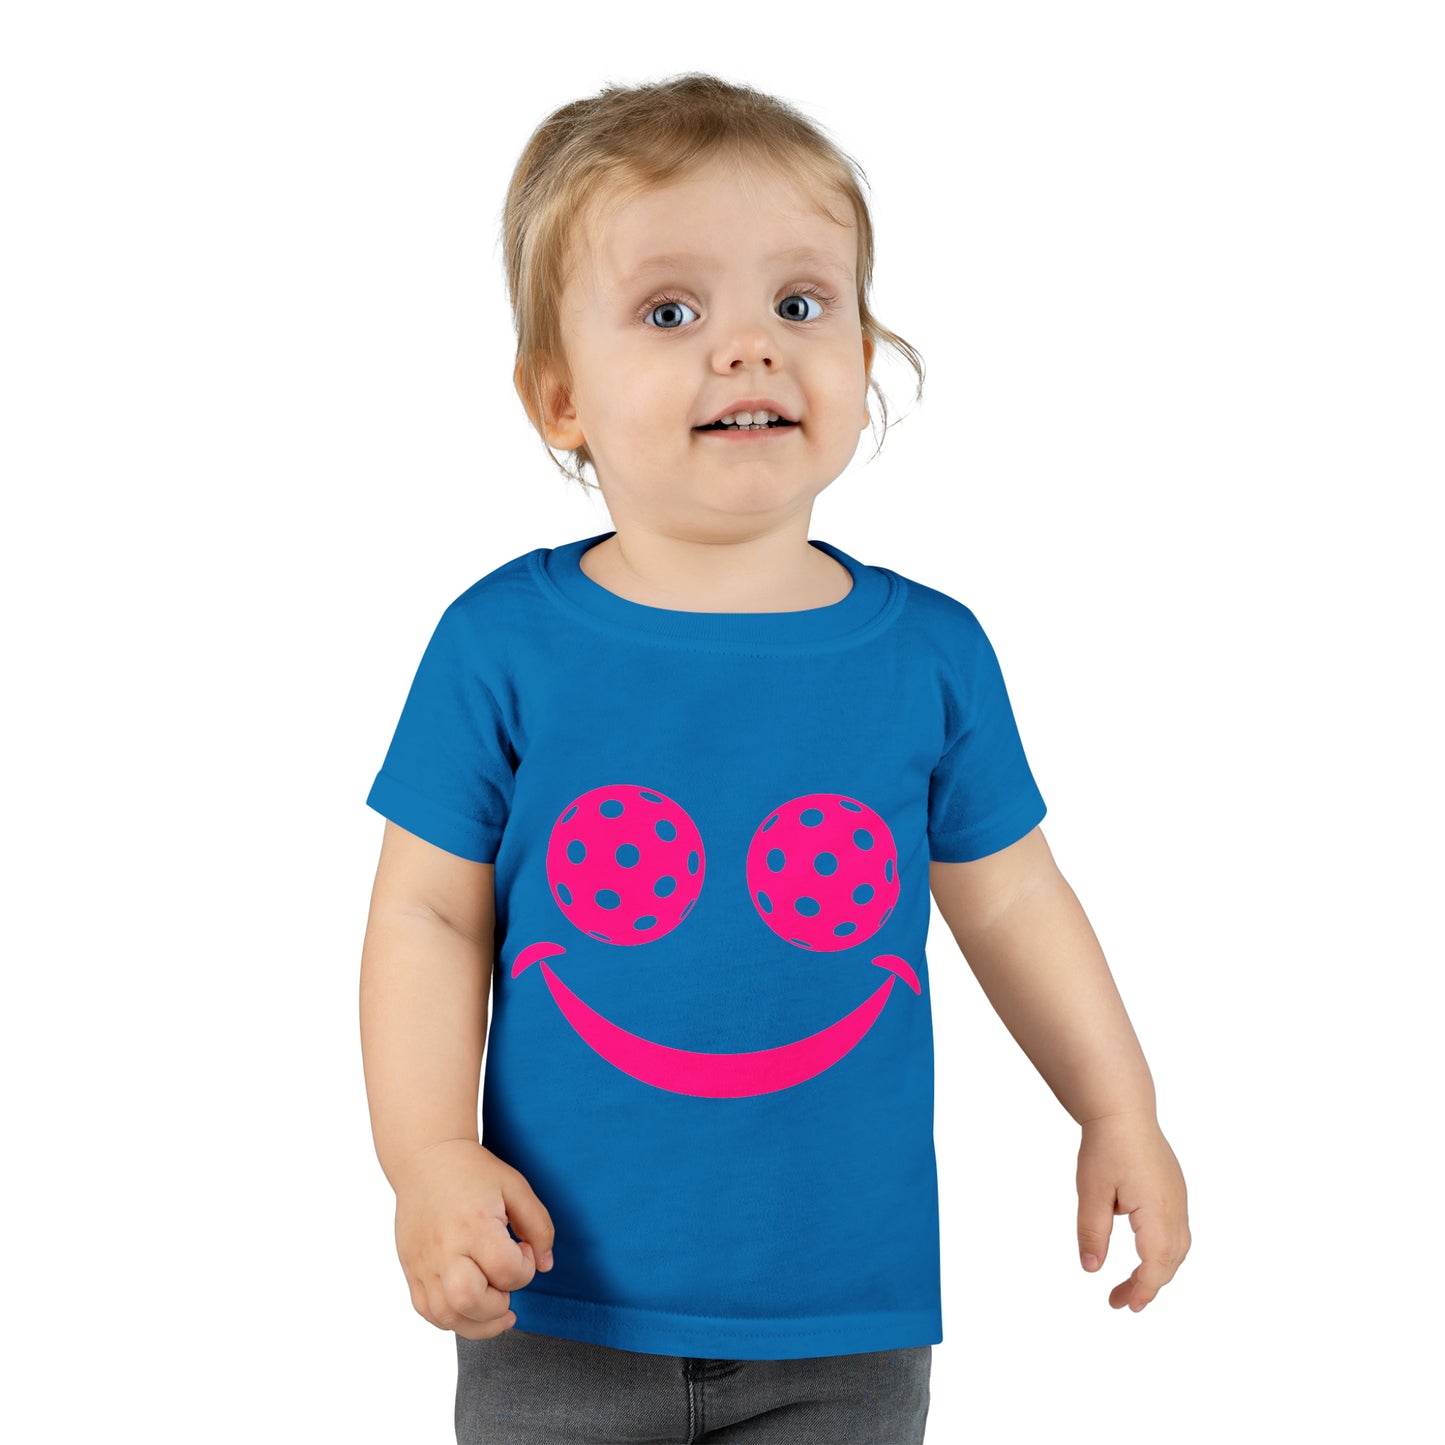 Dinky Toddler T-shirt